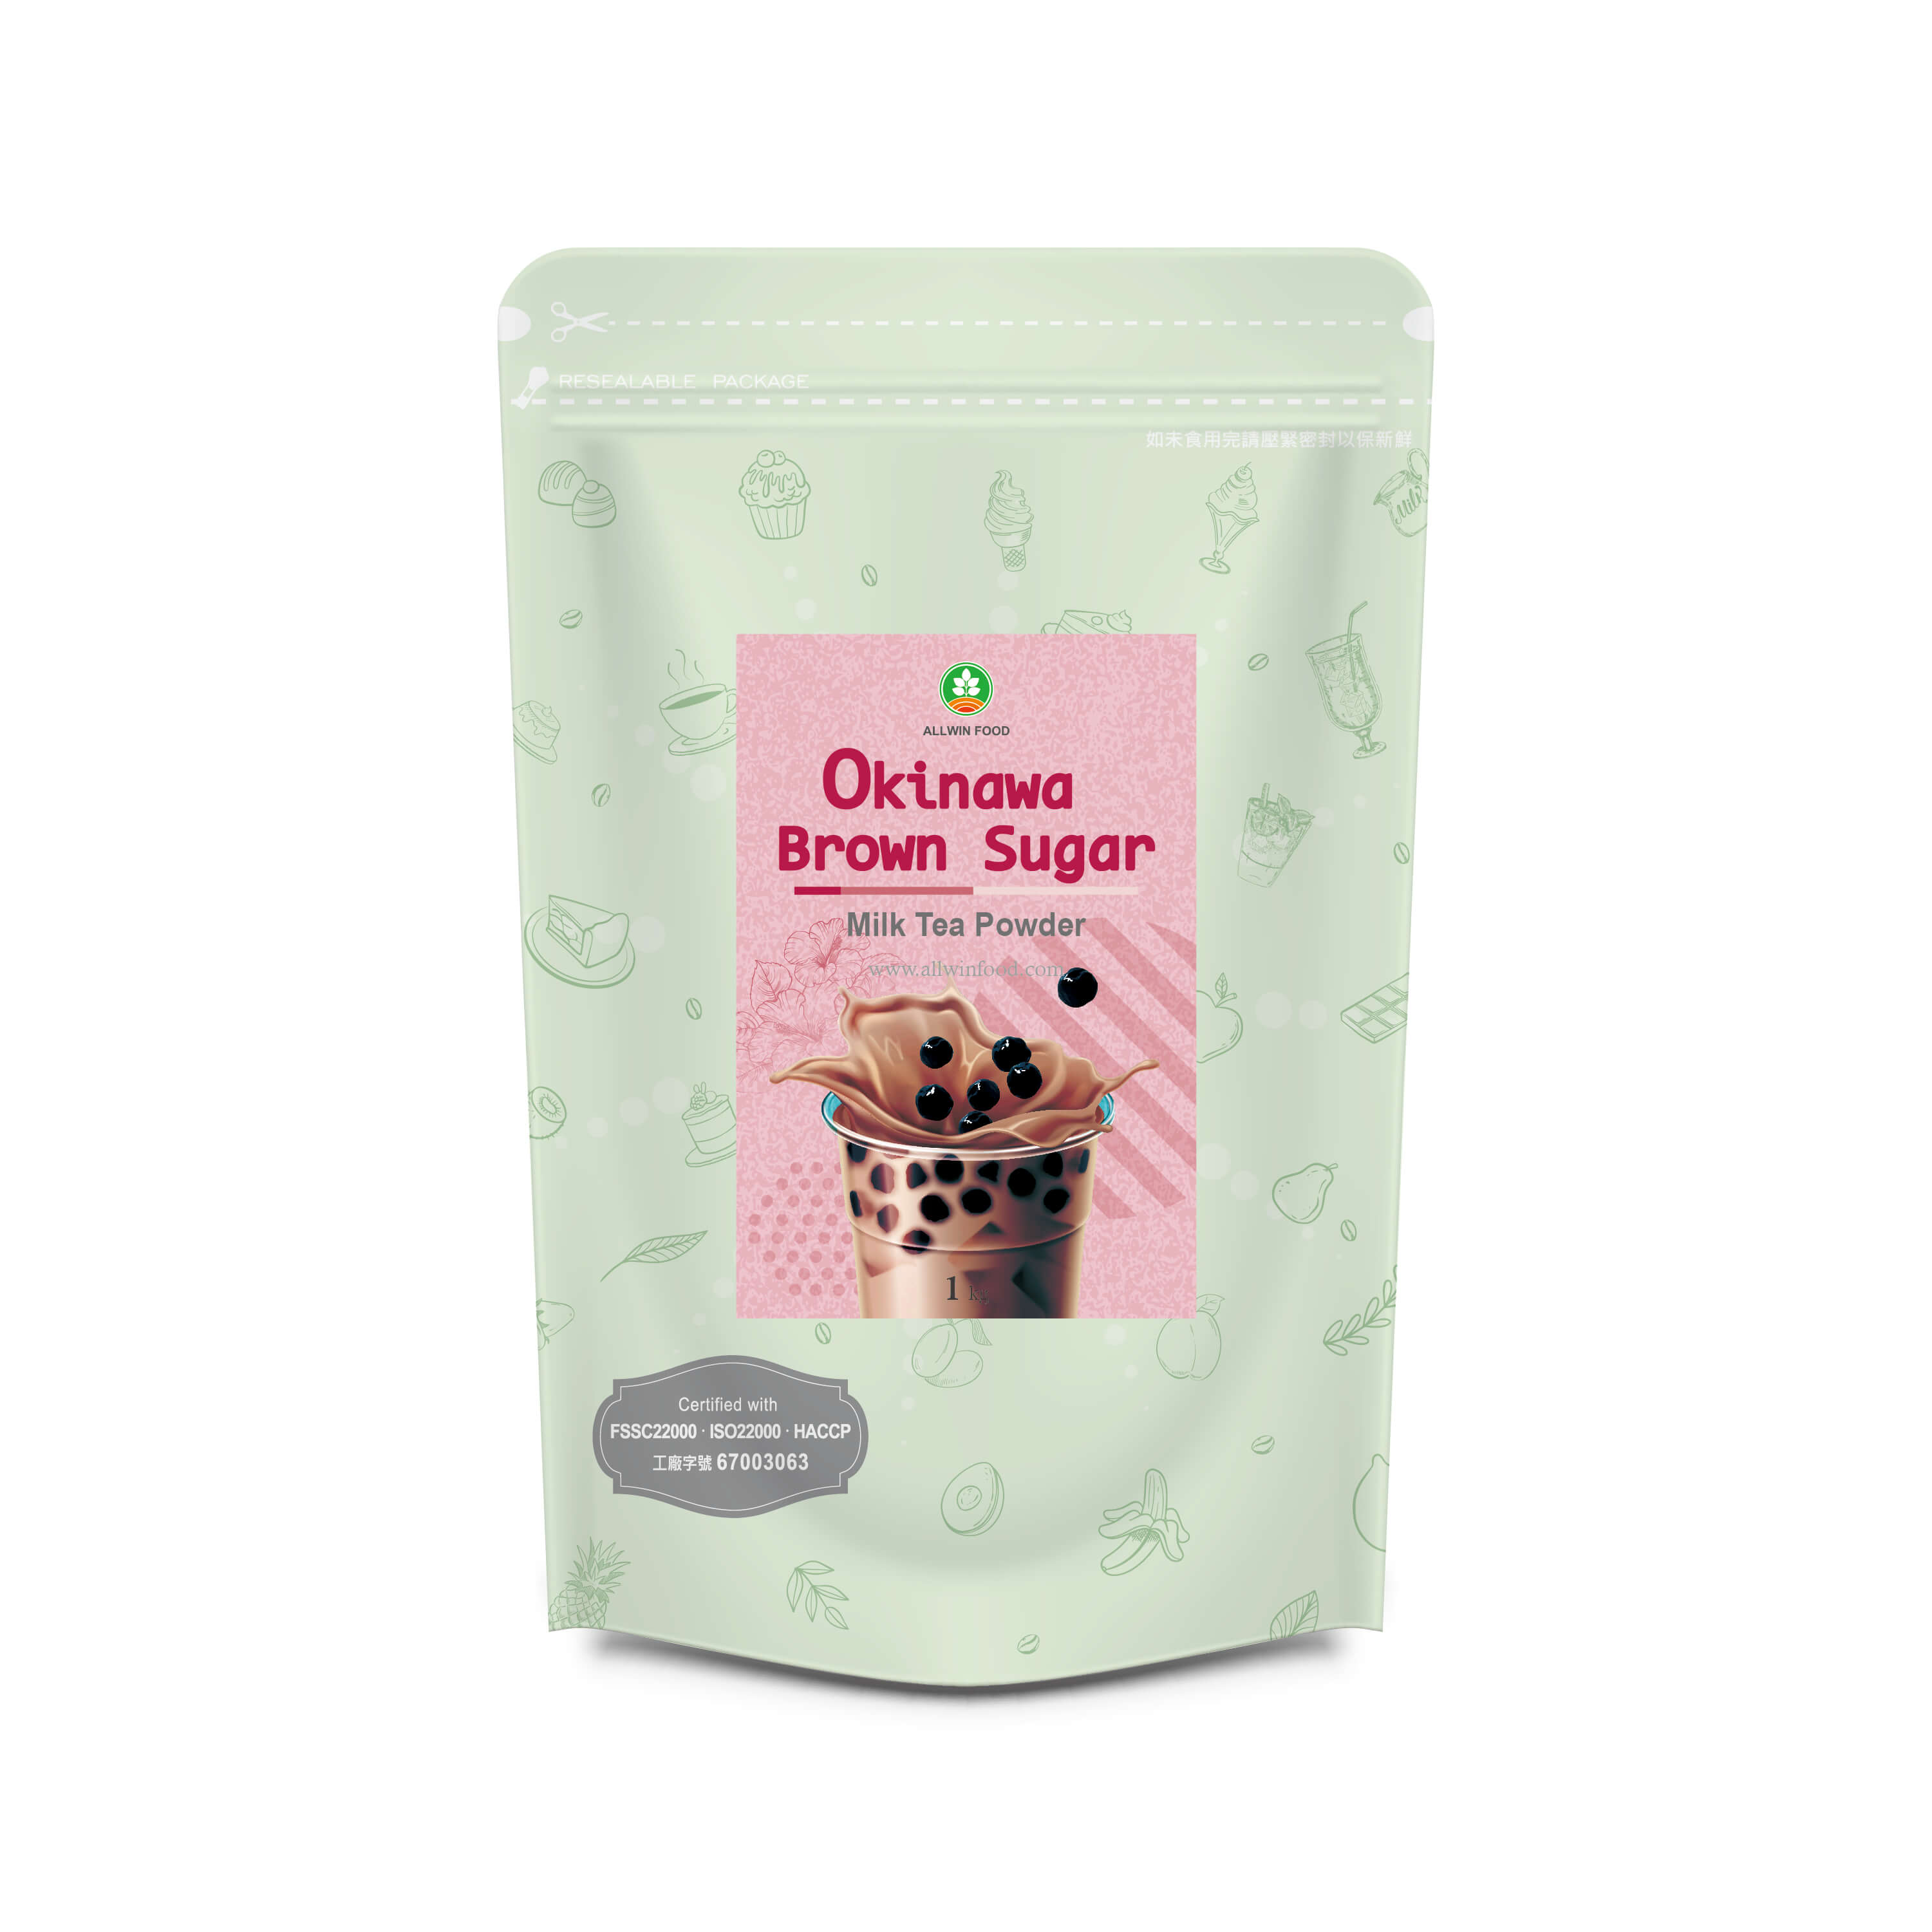 Okinawa Brown Sugar Milk Tea Powder